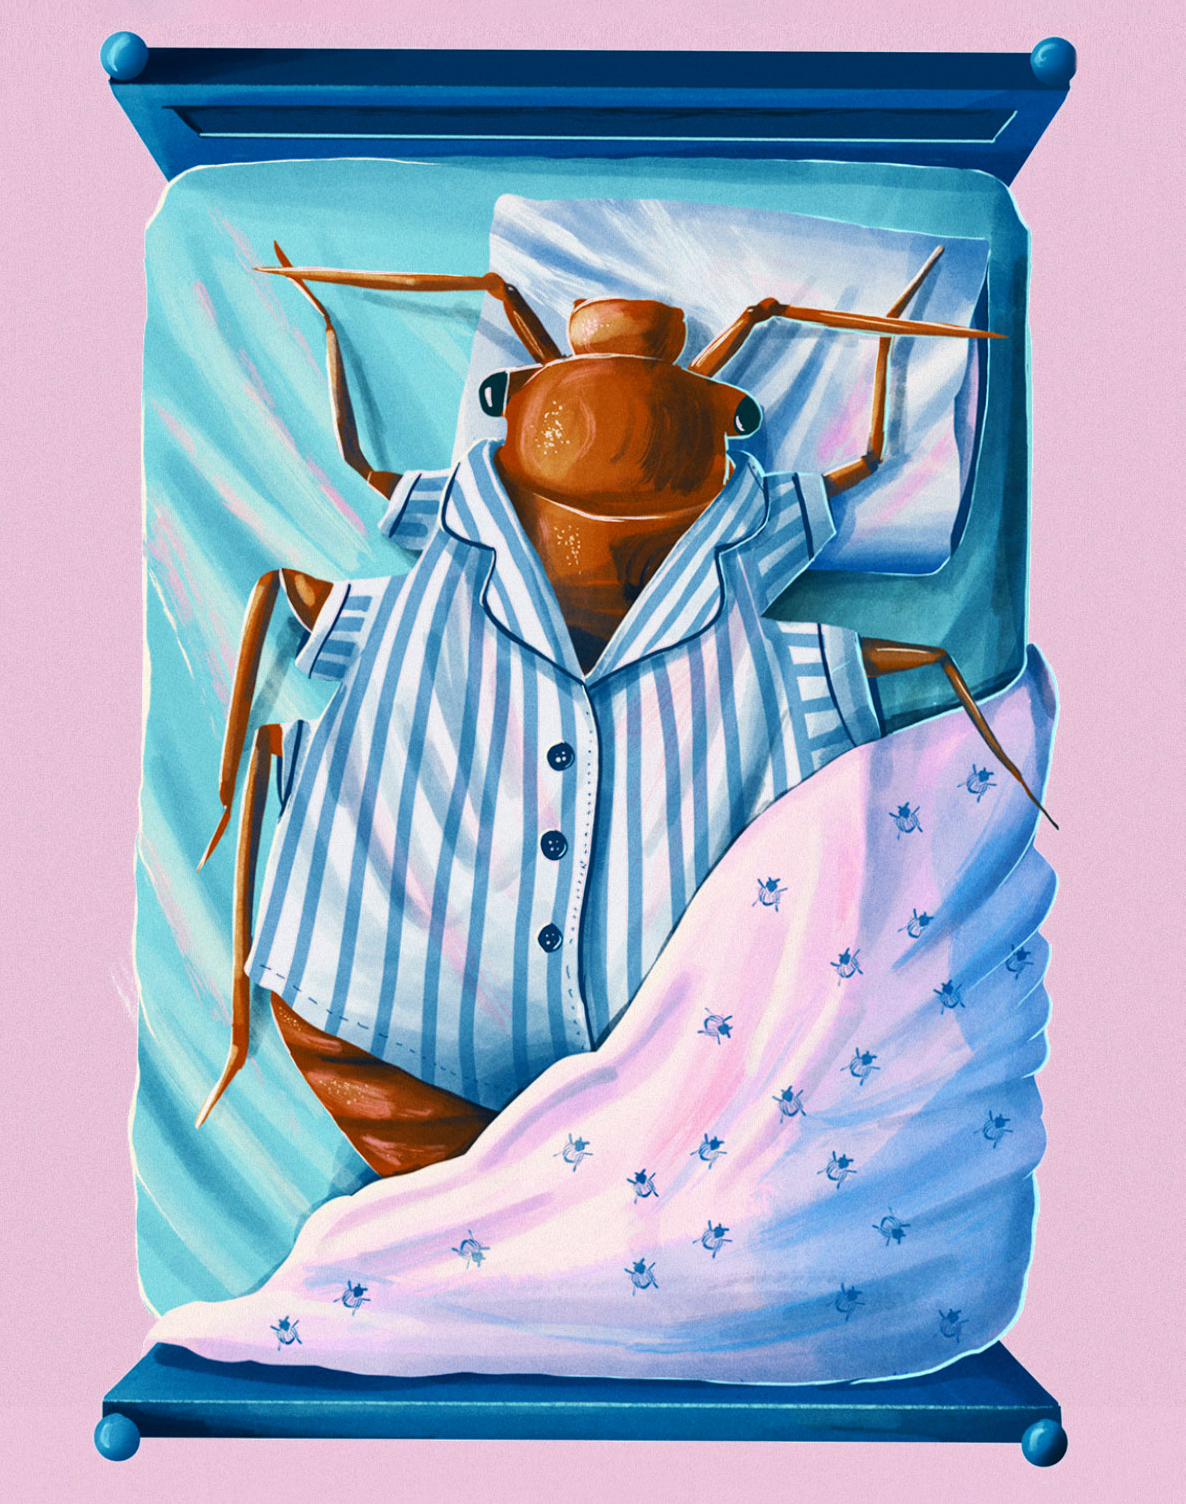 Bedbugs by Katty Huertas - Kiblind magazine thème insectes